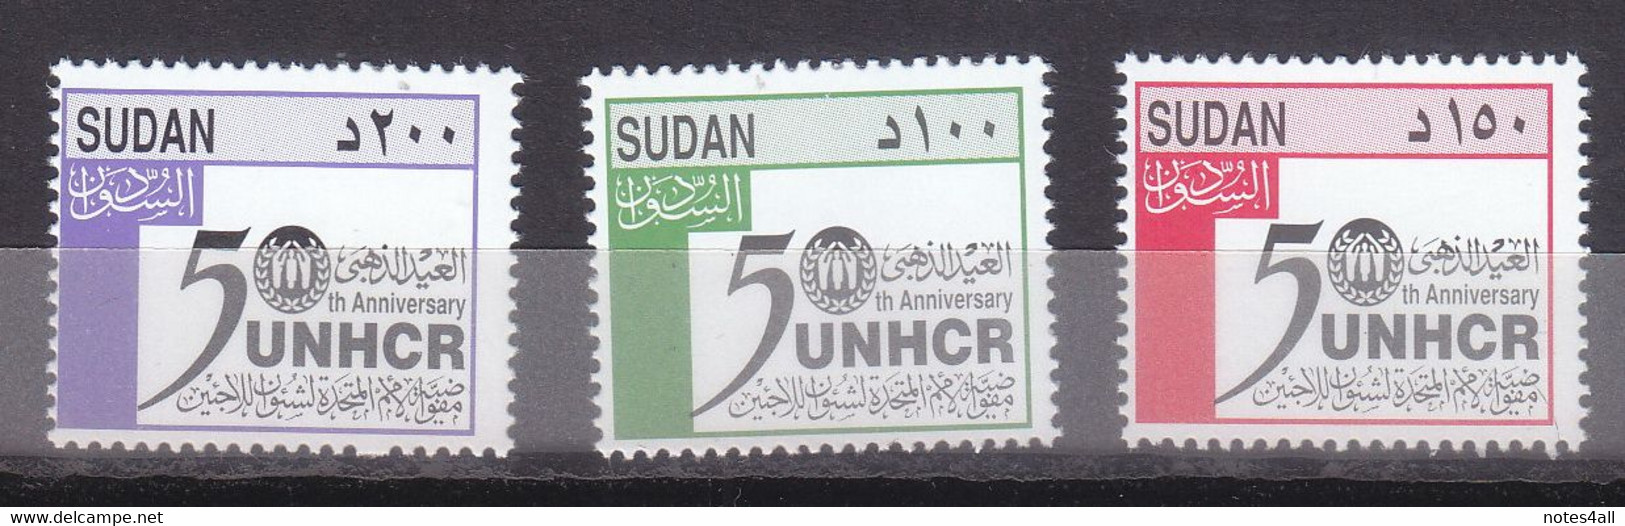 Stamps SUDAN 2001 SC 523 525 UN REFUGEES UNHCR 50TH ANNIV MNH SET CV$27 # 55 - Sudan (1954-...)